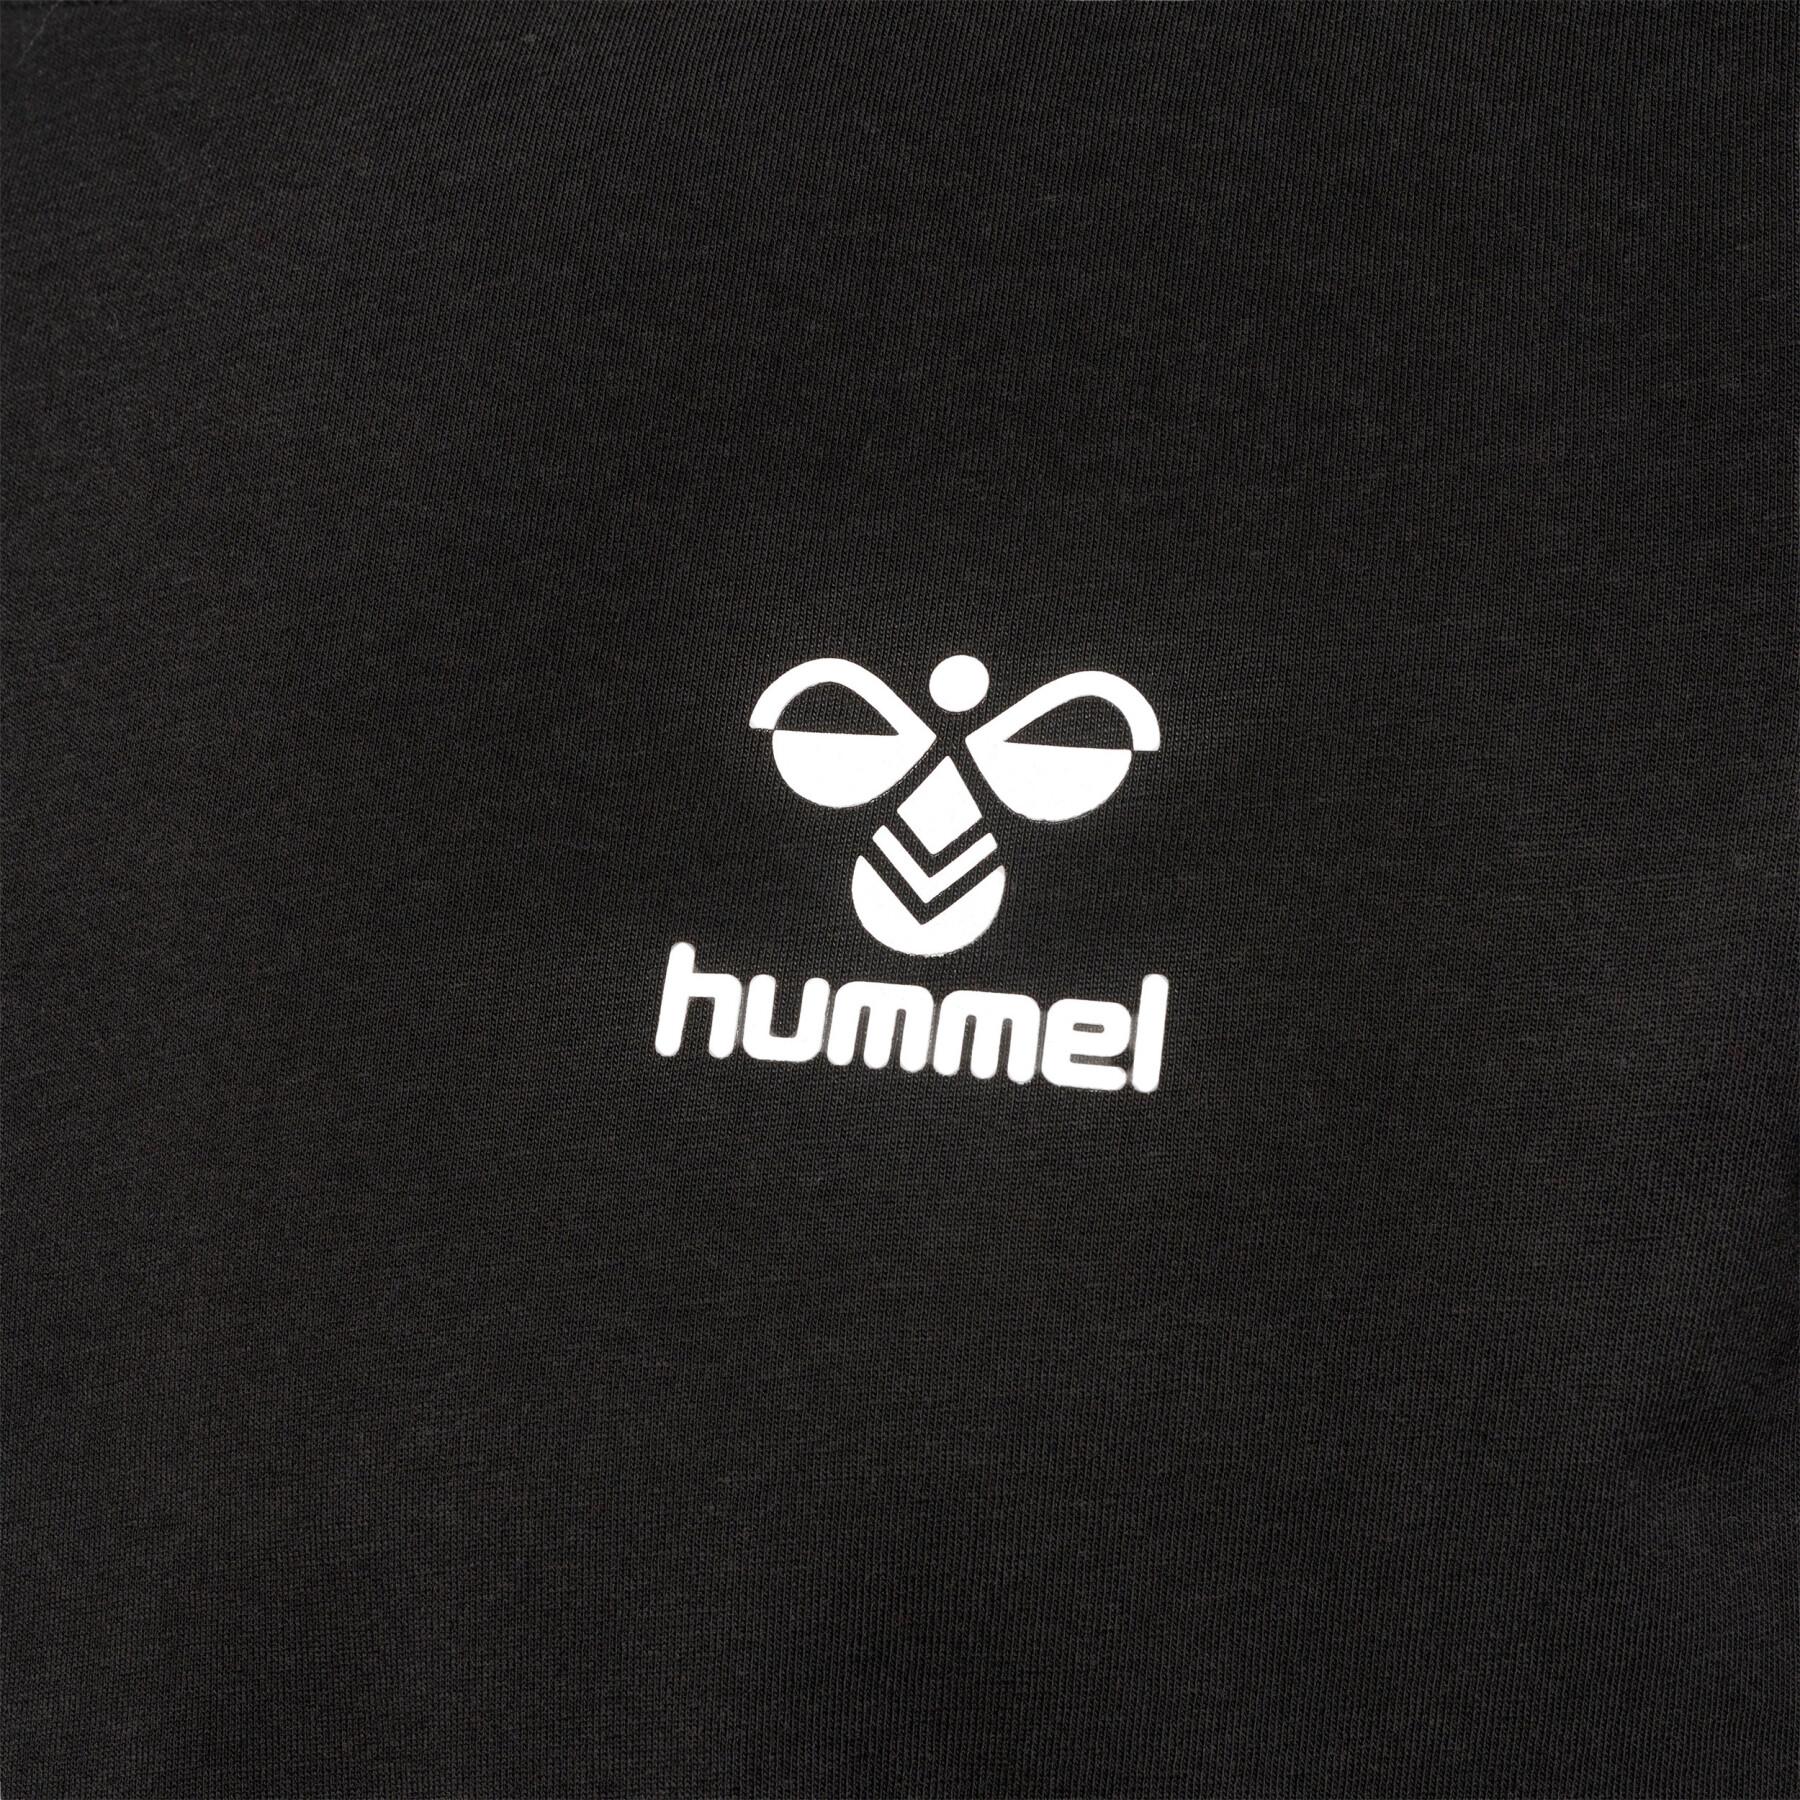 Man Polo T-shirts - T-shirt and Hummel Lifestyle Icons - - shirts